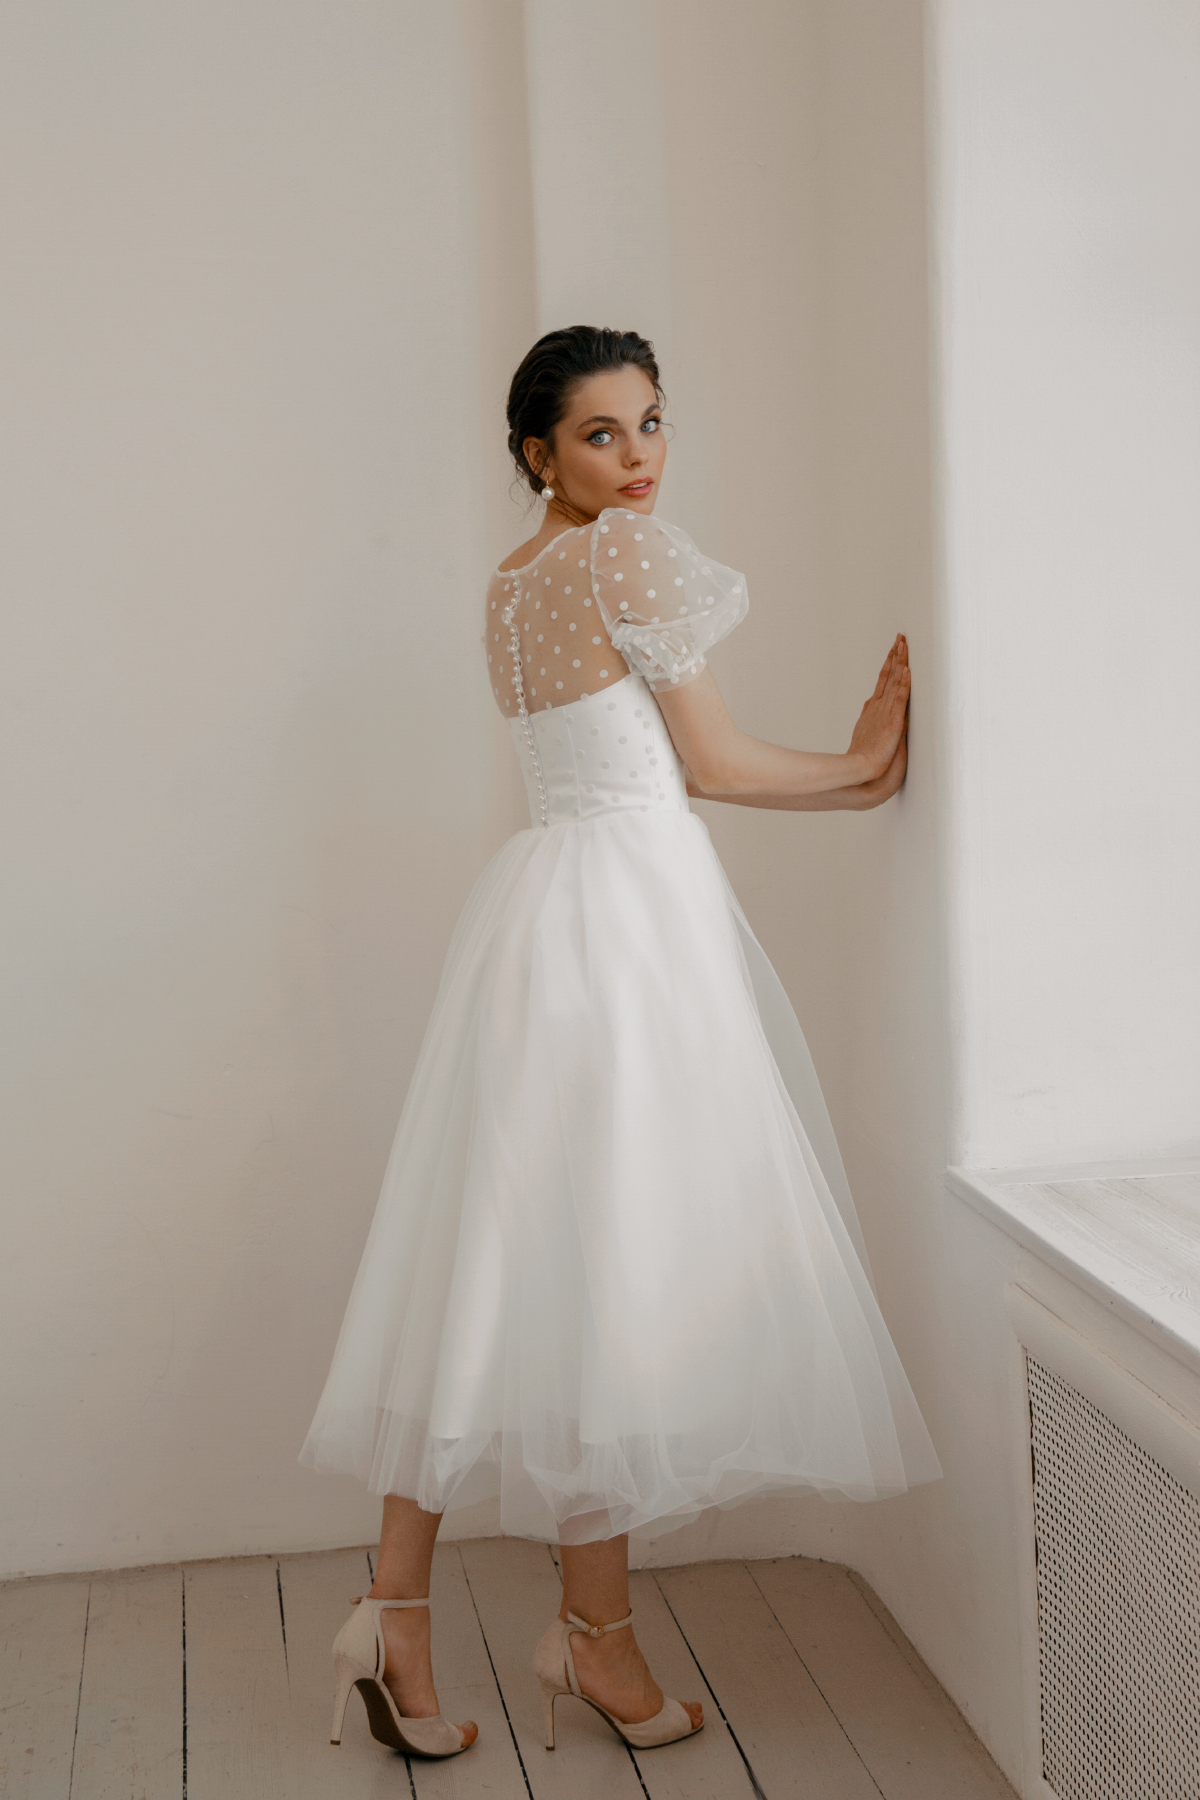 Short corset wedding dress with sleeves